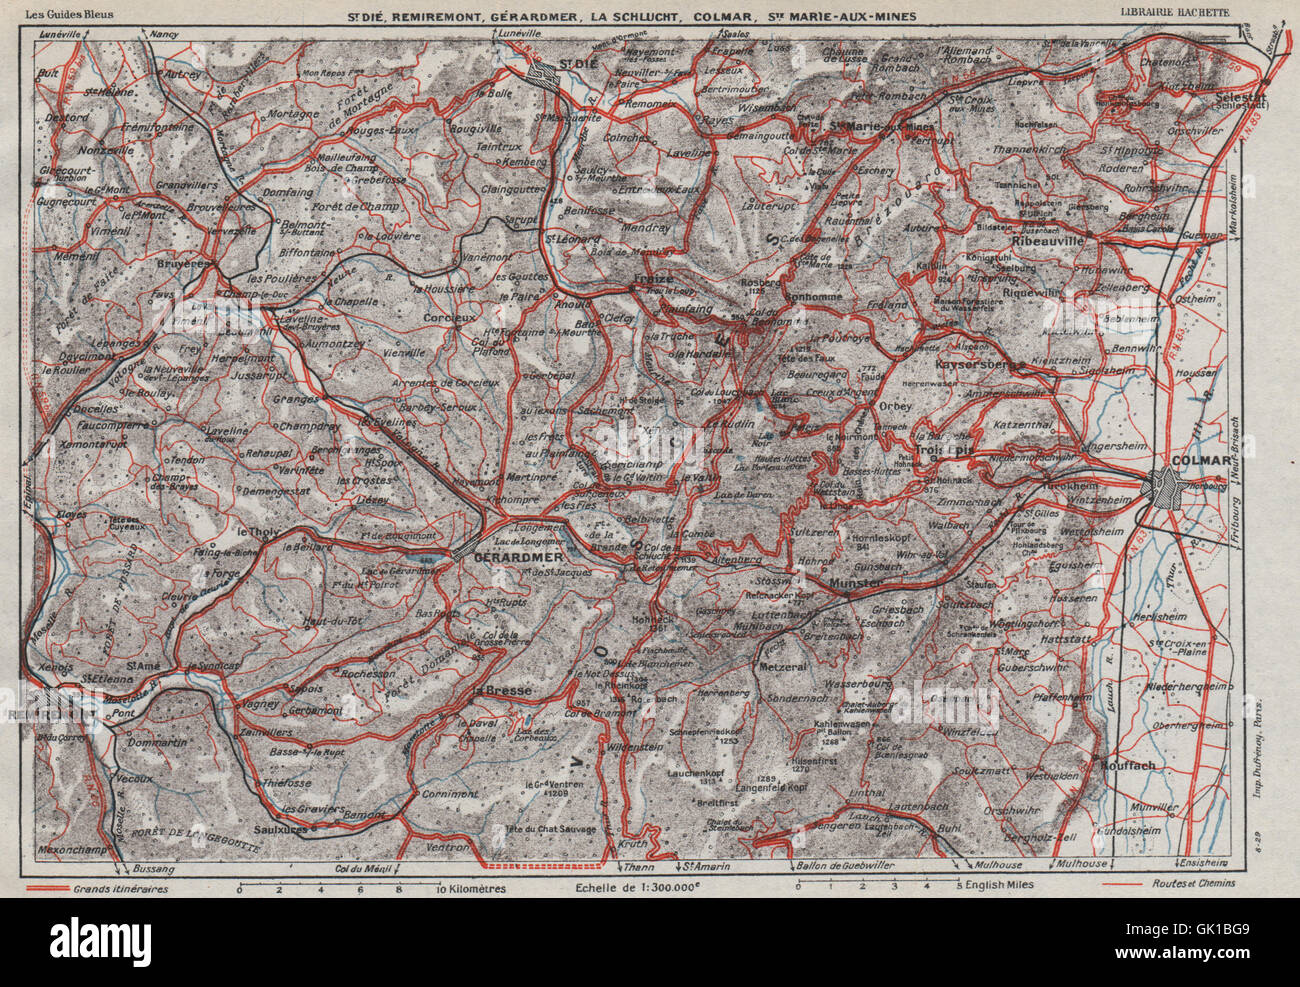 VOSGES.St Dié Remiremont Gérardmer La Schlucht Colmar.Haut-Rhin.L'Alsazia, 1930 Mappa Foto Stock